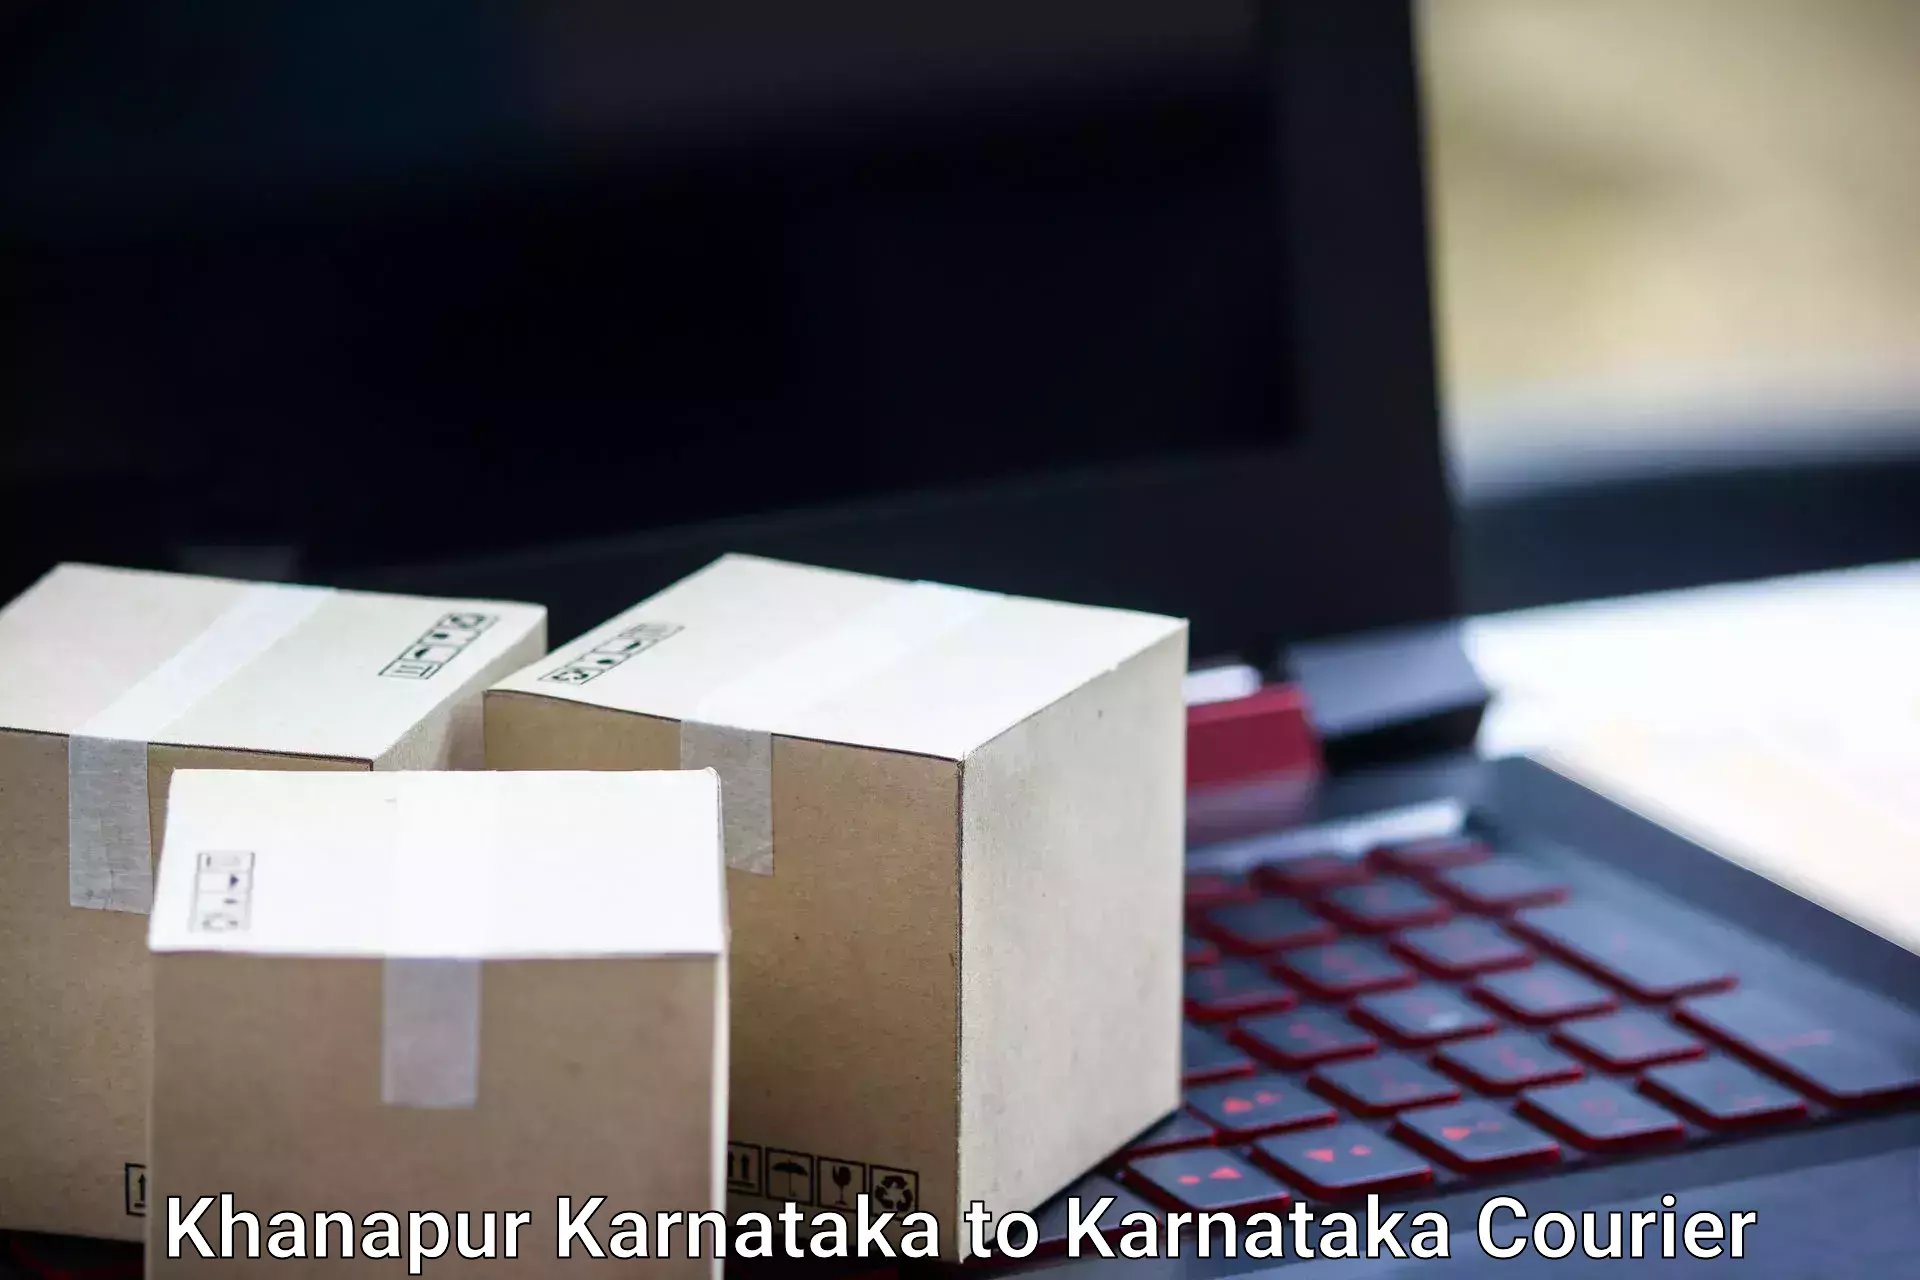 Baggage relocation service Khanapur Karnataka to Talikoti